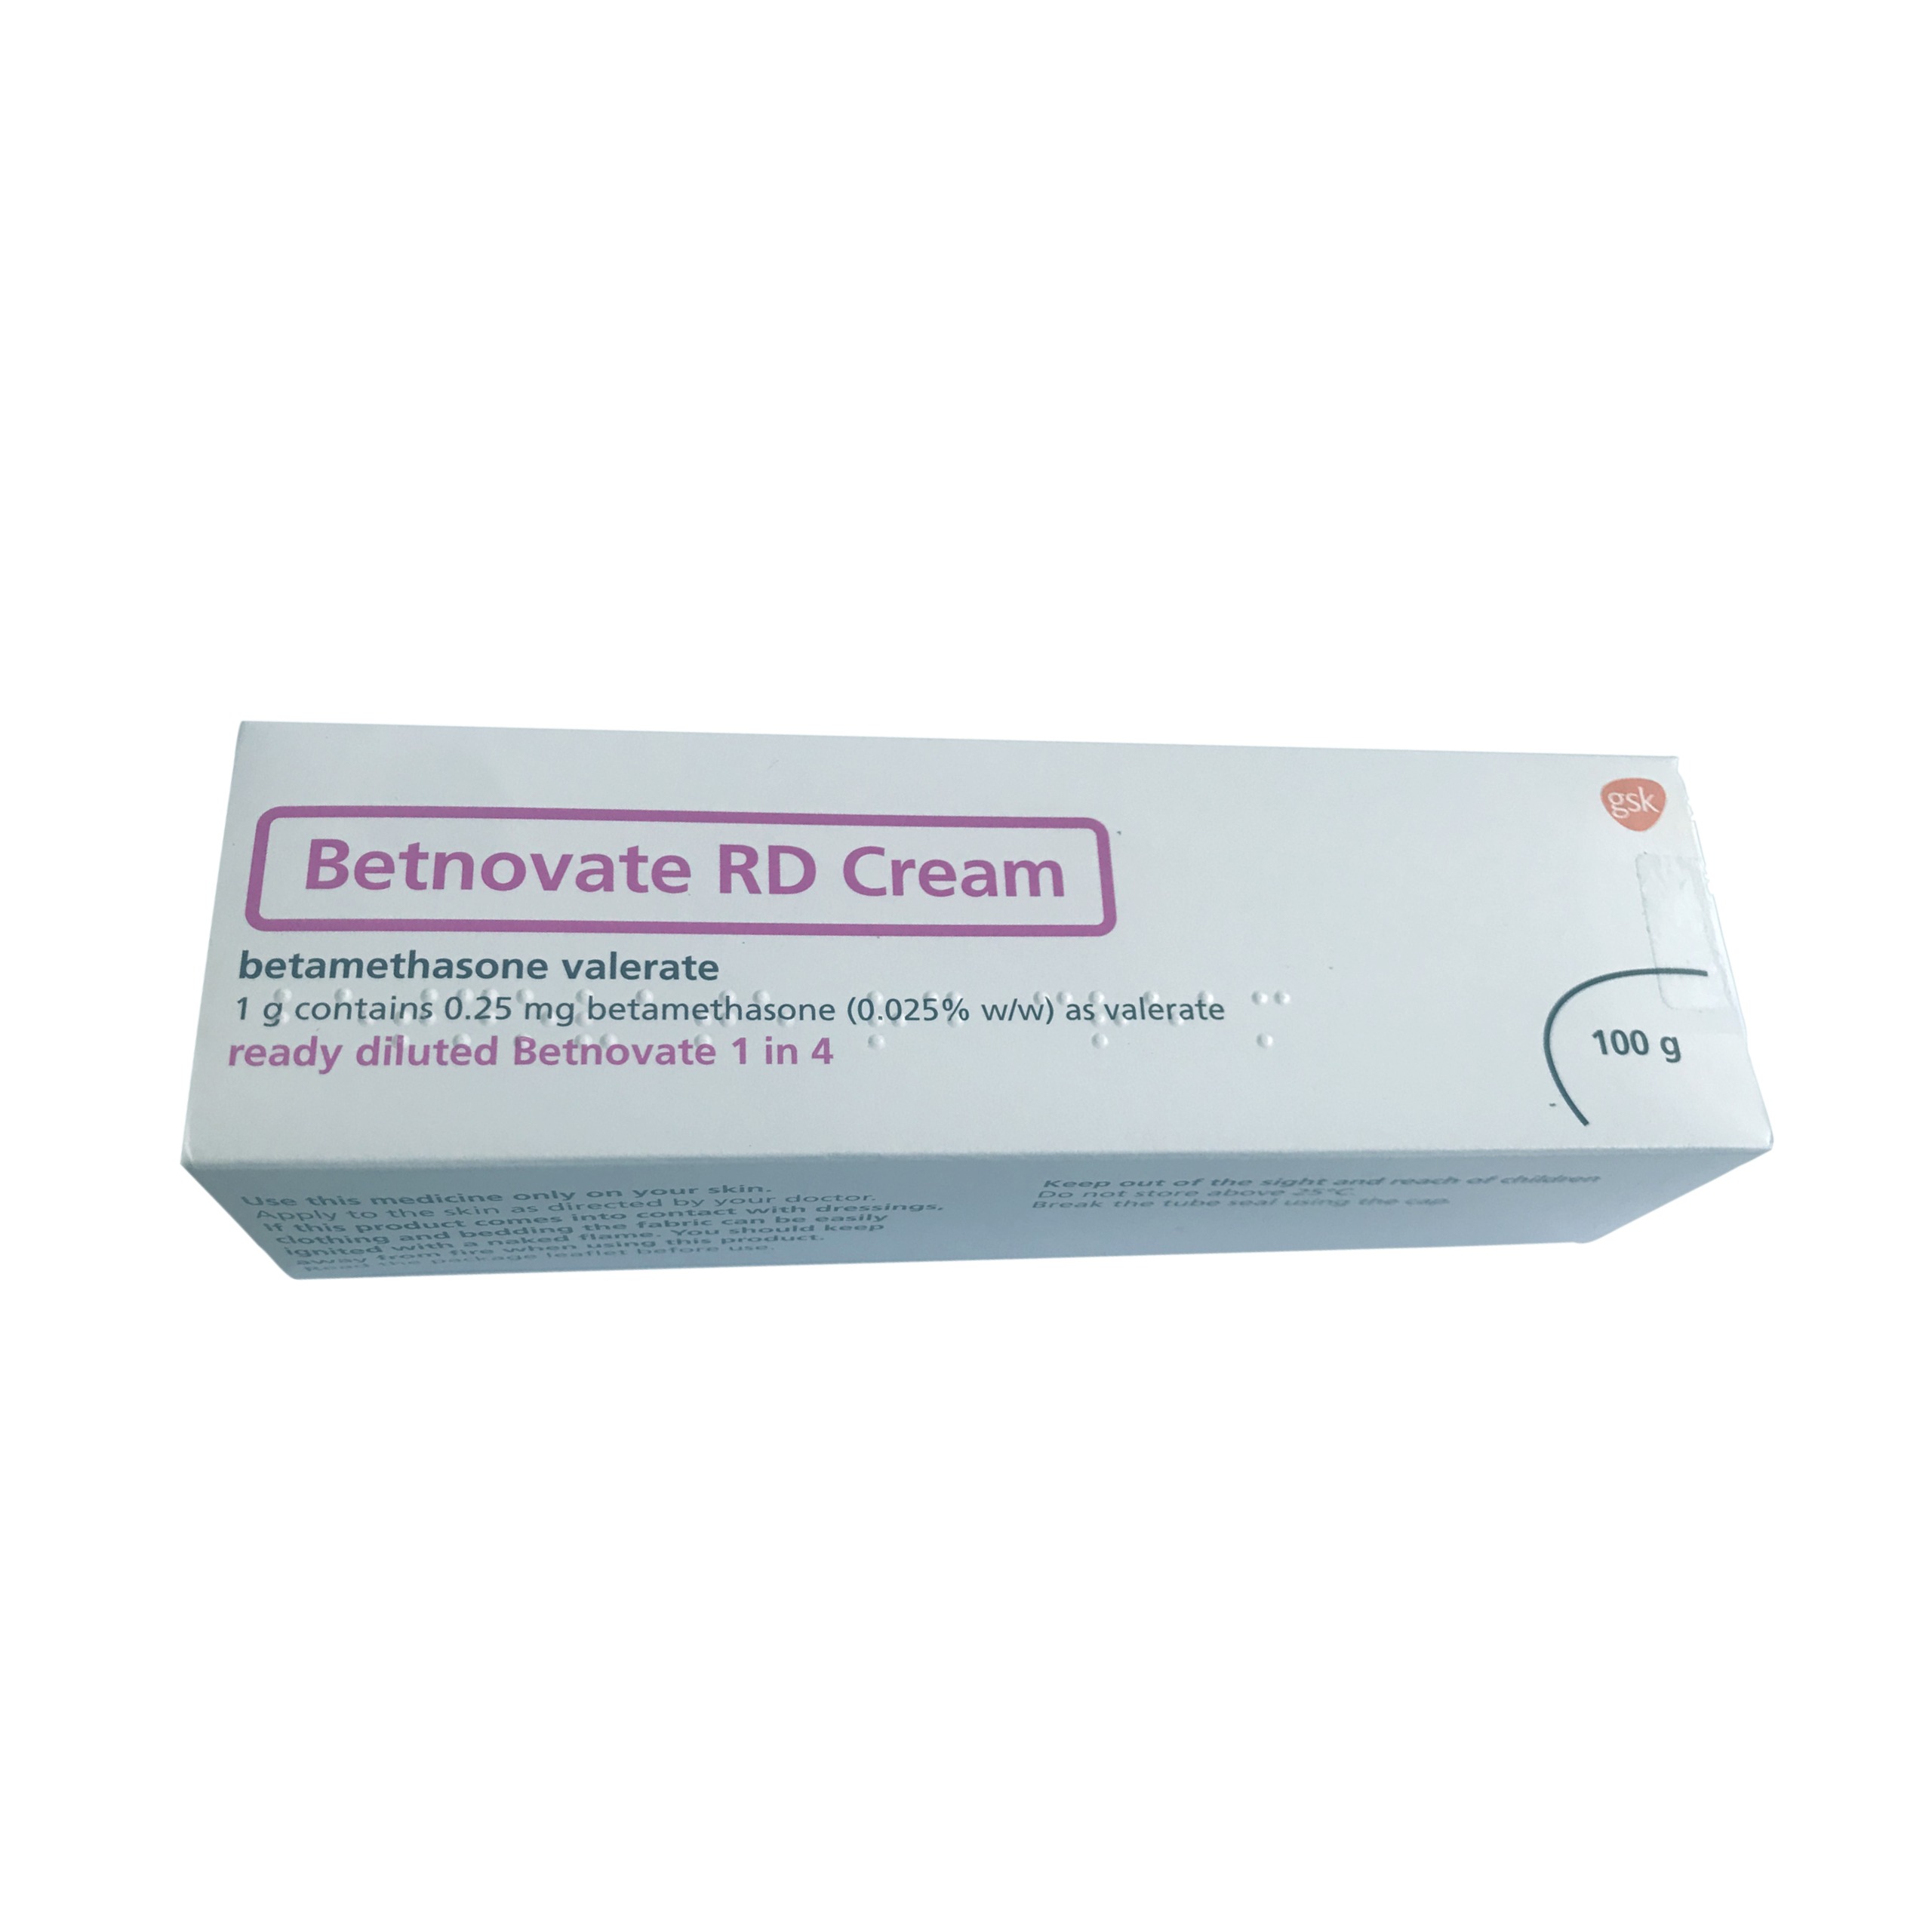 Betnovate RD Cream